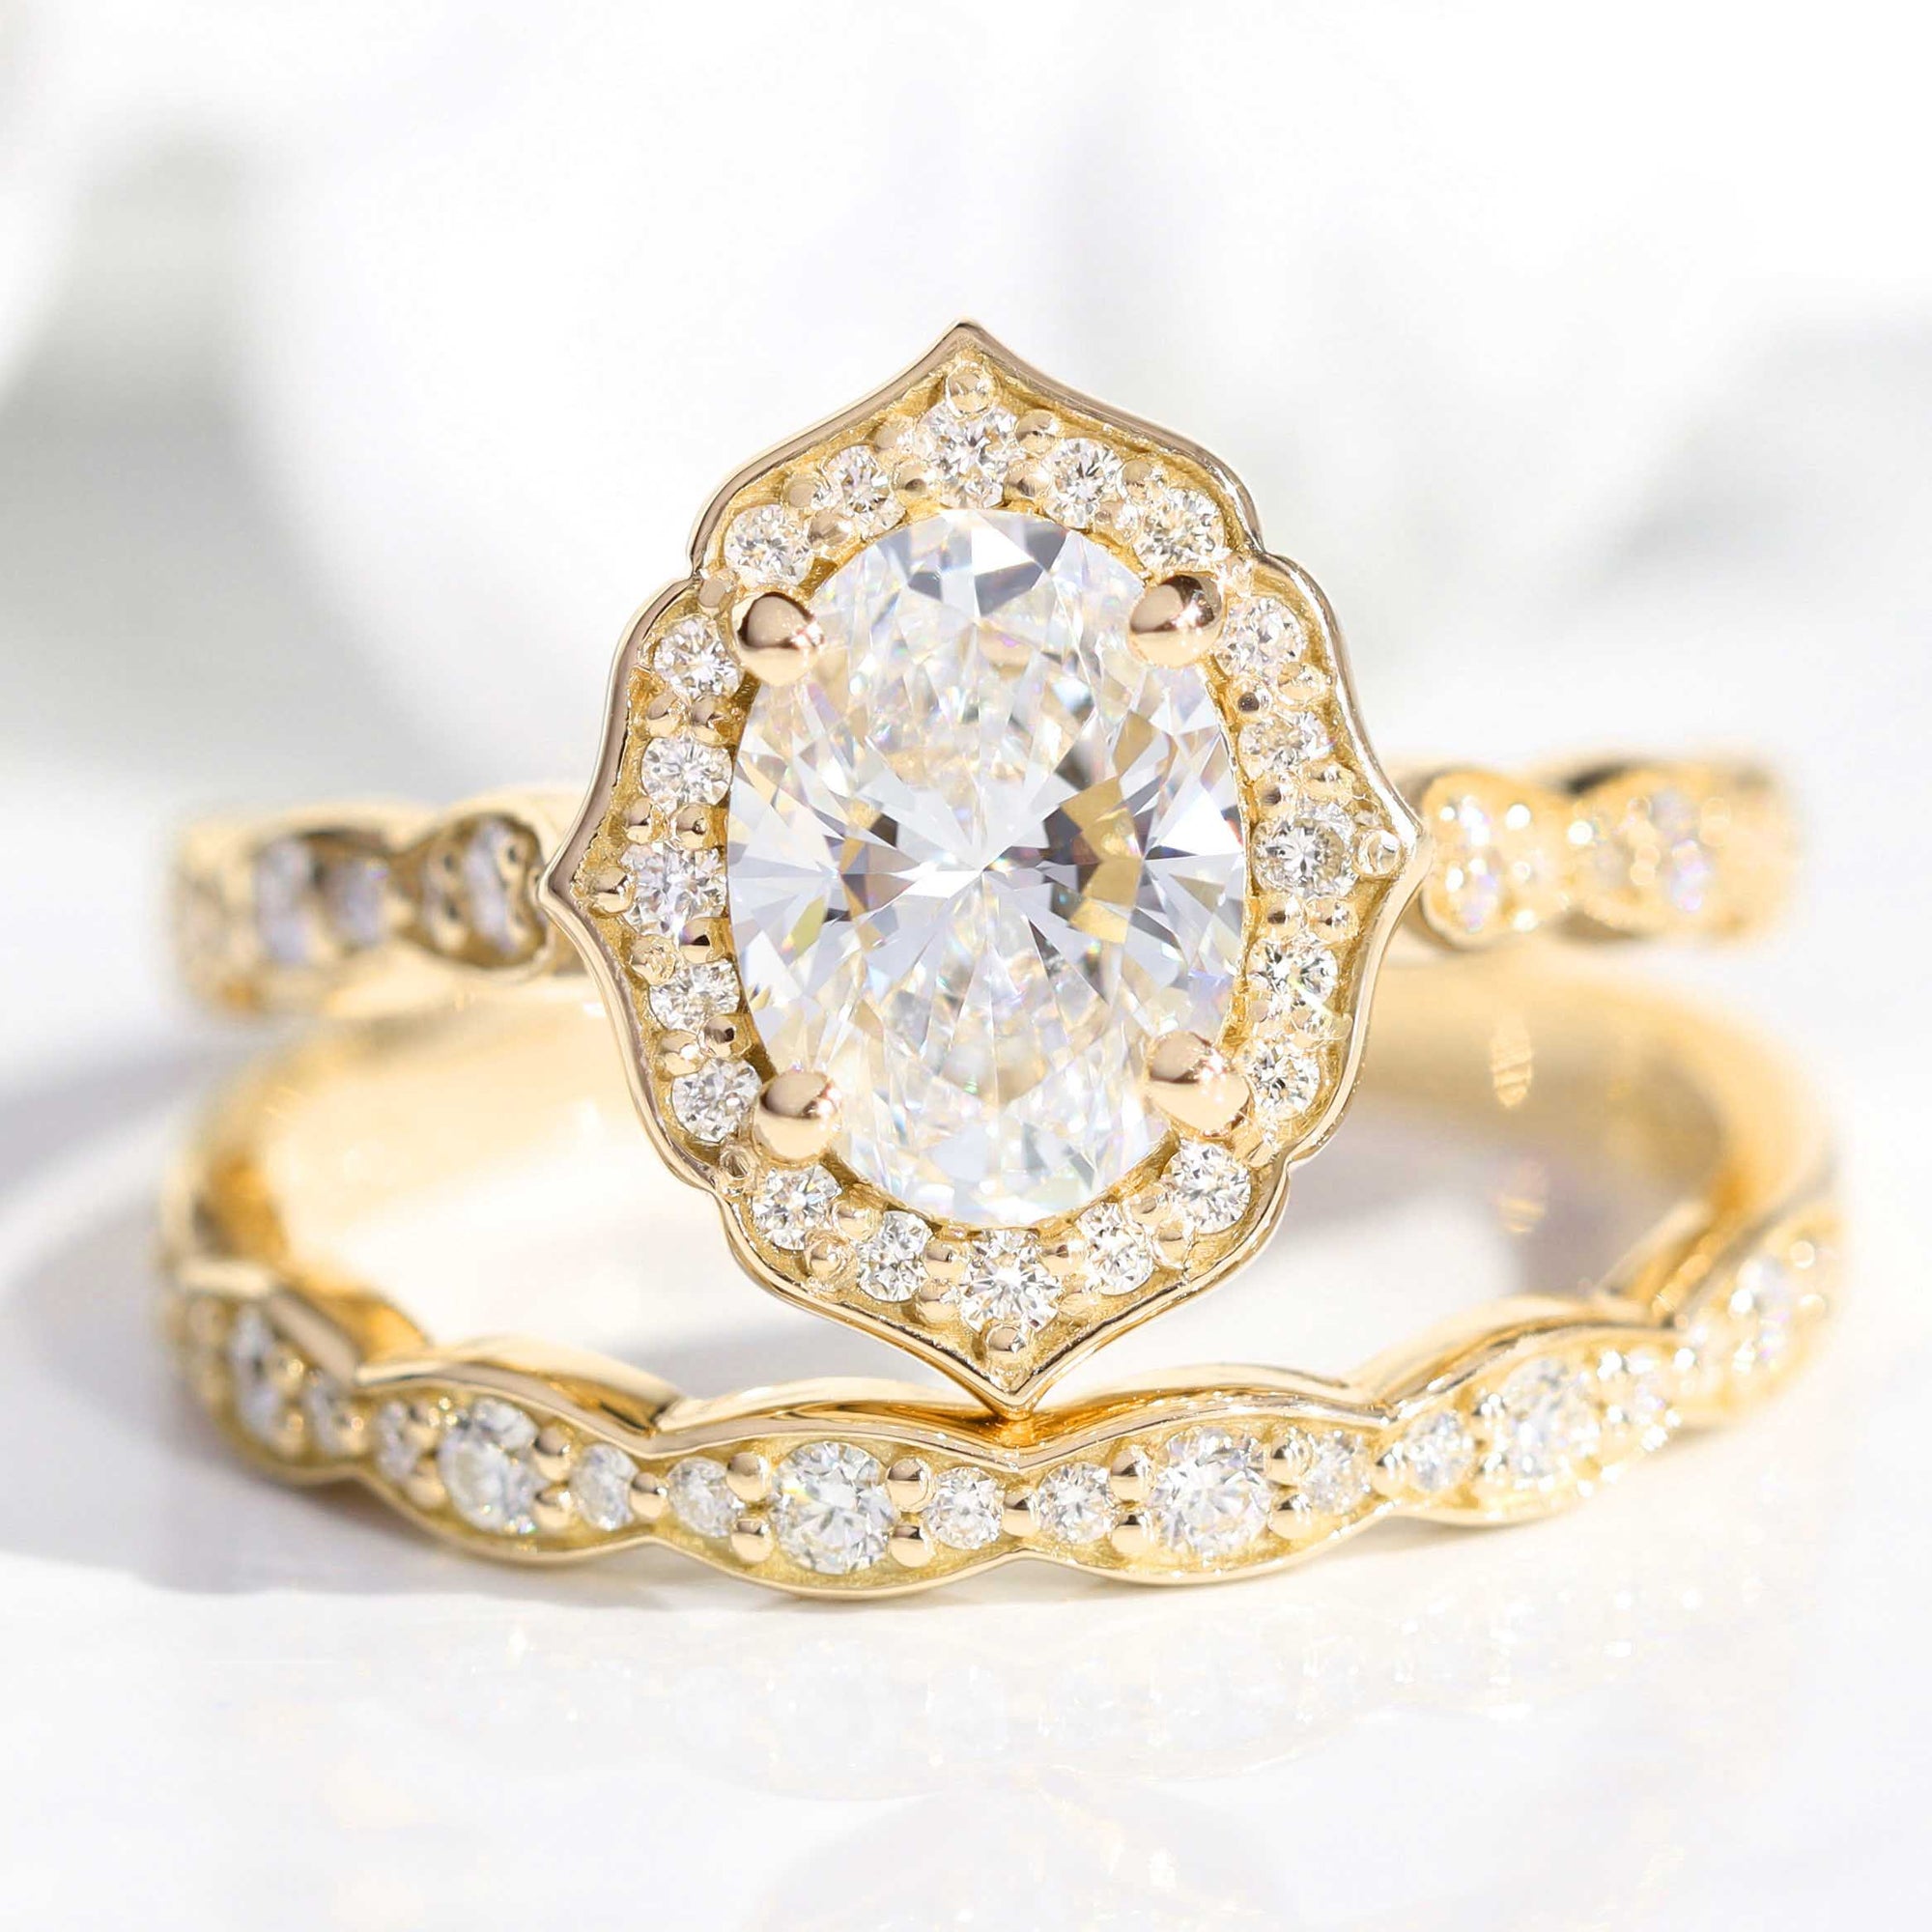 lab diamond ring stack yellow gold vintage halo oval diamond engagement ring set La More Design Jewelry